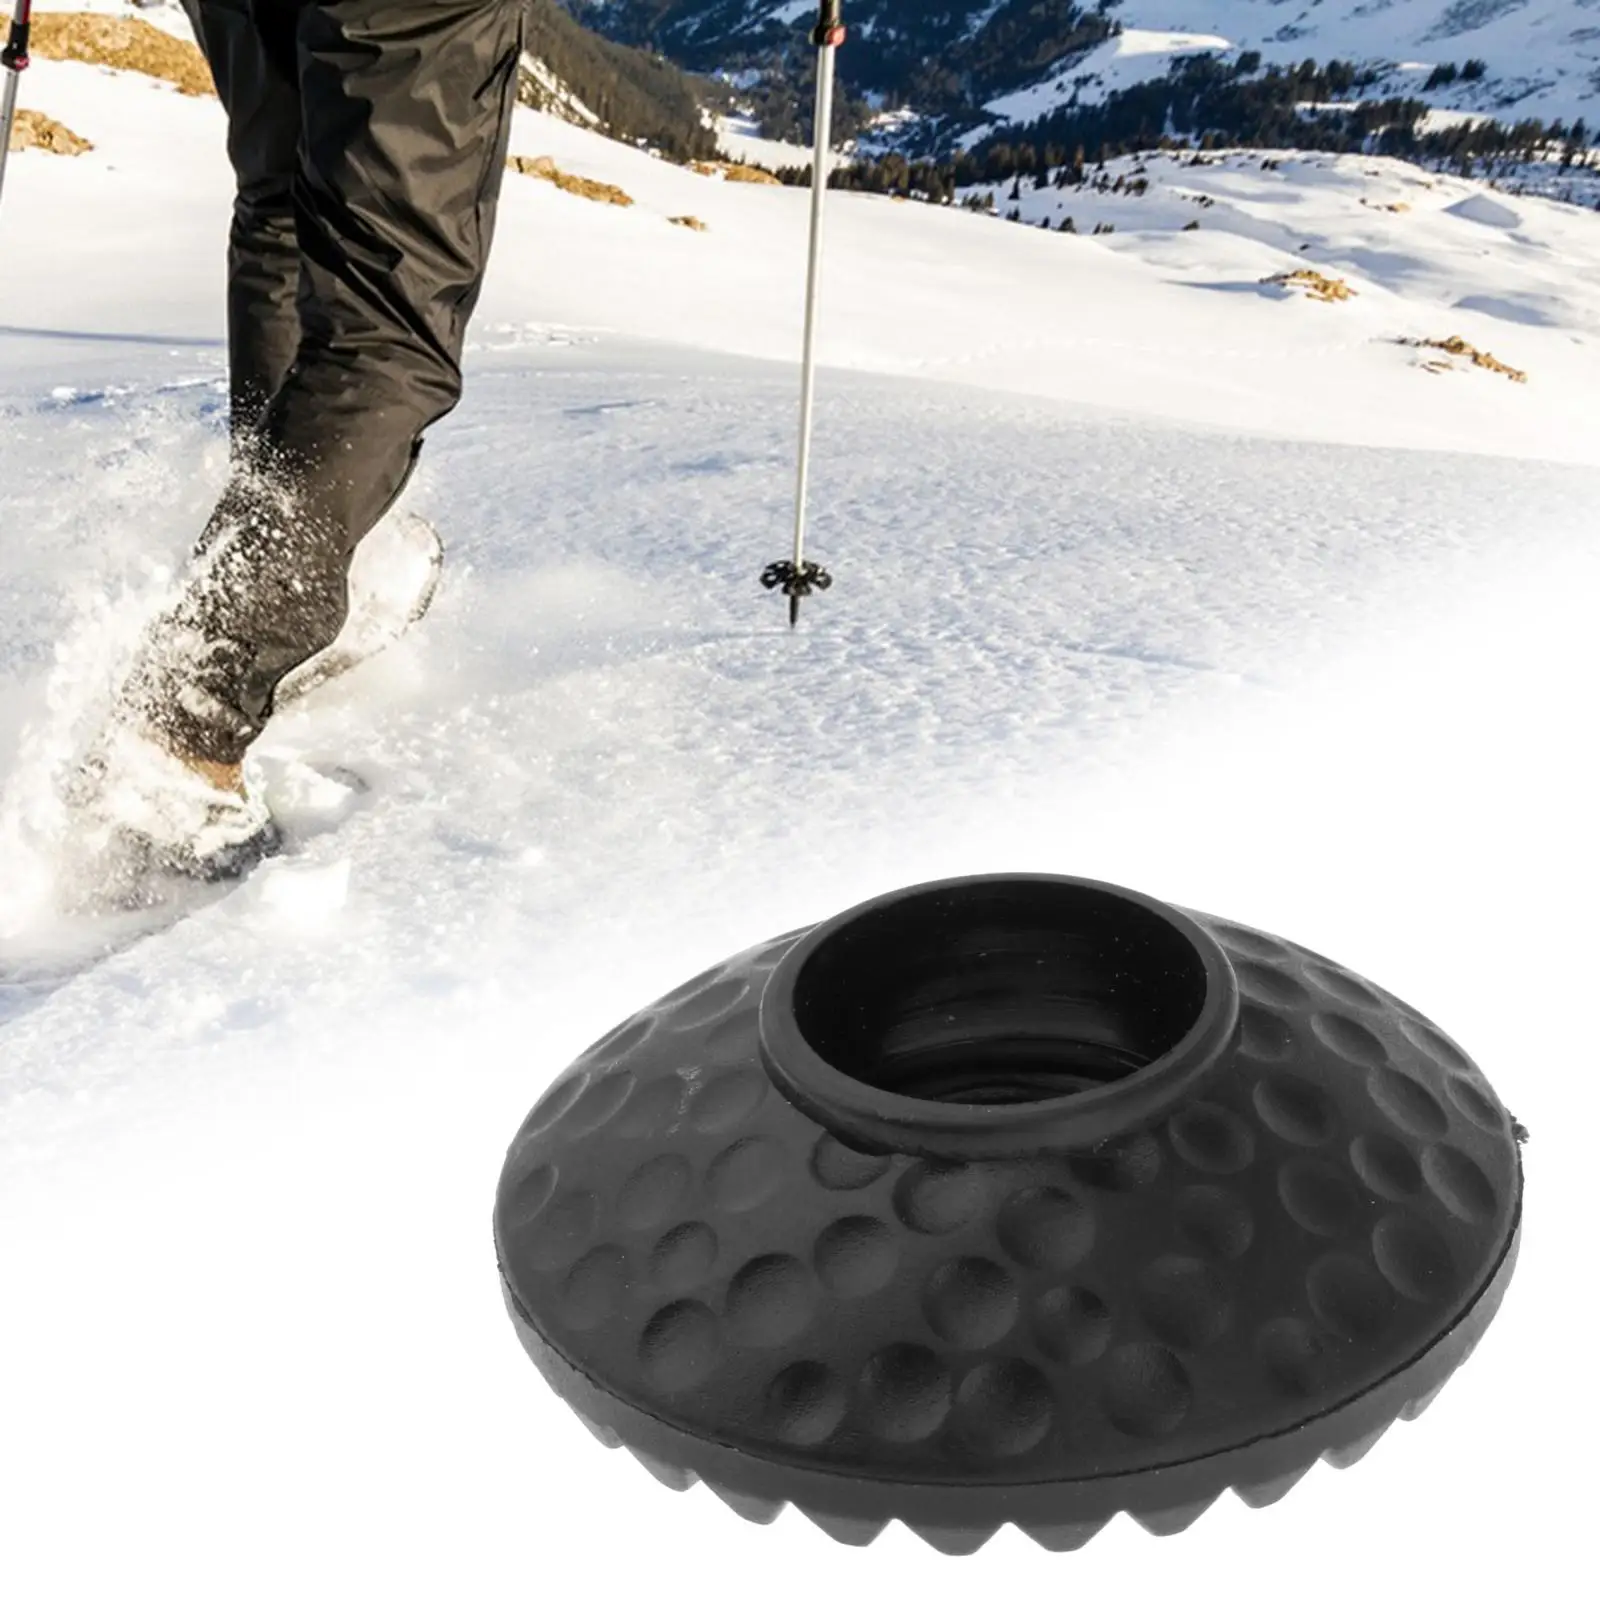 Trekking Pole Muddy Basket Snow Basket Hiking Sticks Accessories Replacement Fit Hiking Outdoor Climbing Trekking Walking Poles